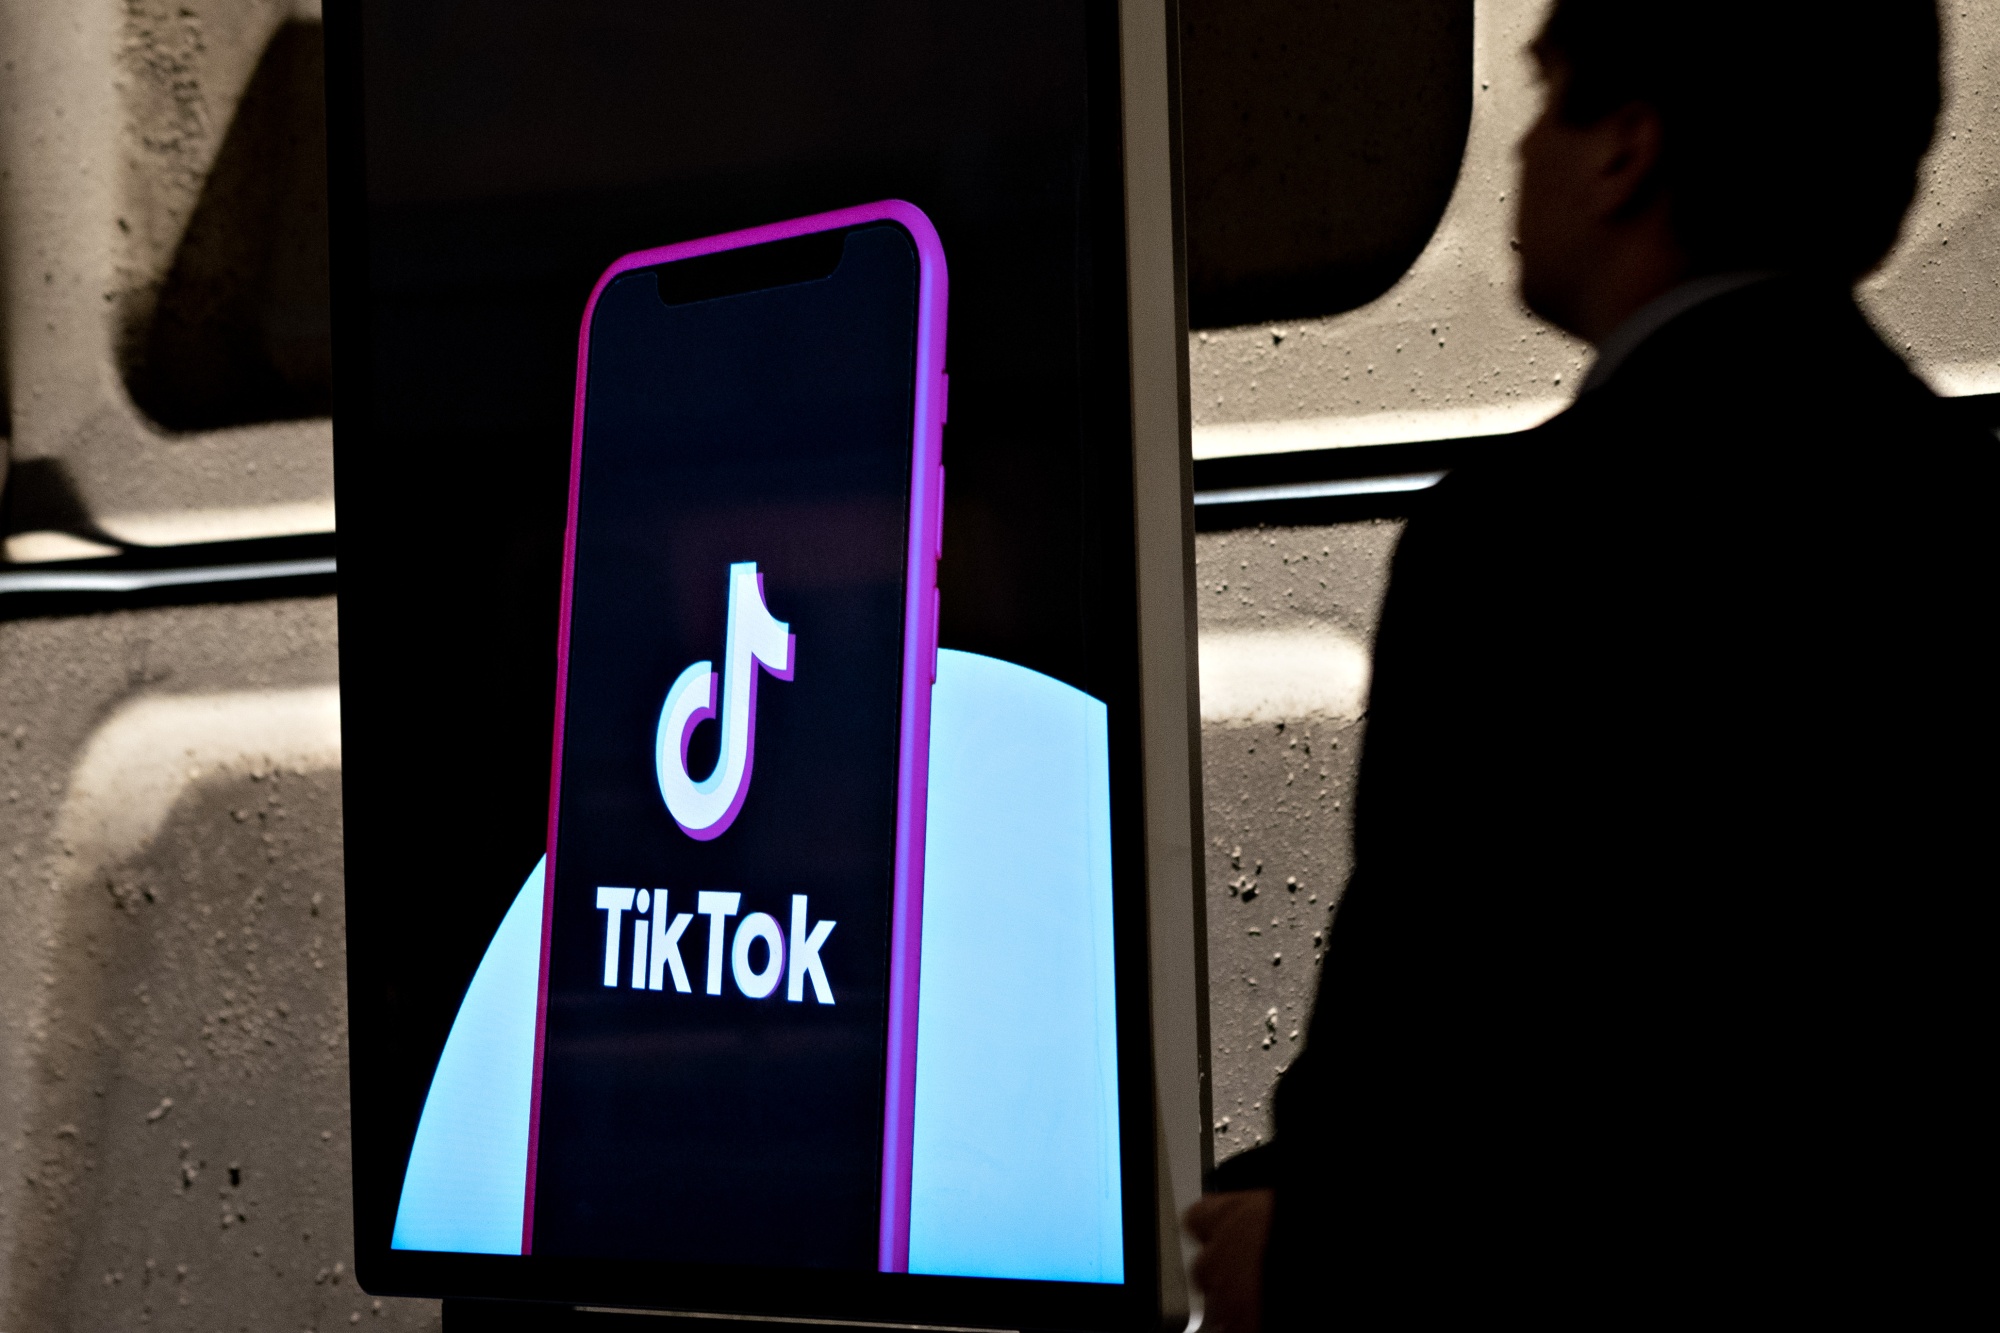 Buy TikTok Accounts - Fresh & Accounts With Followers